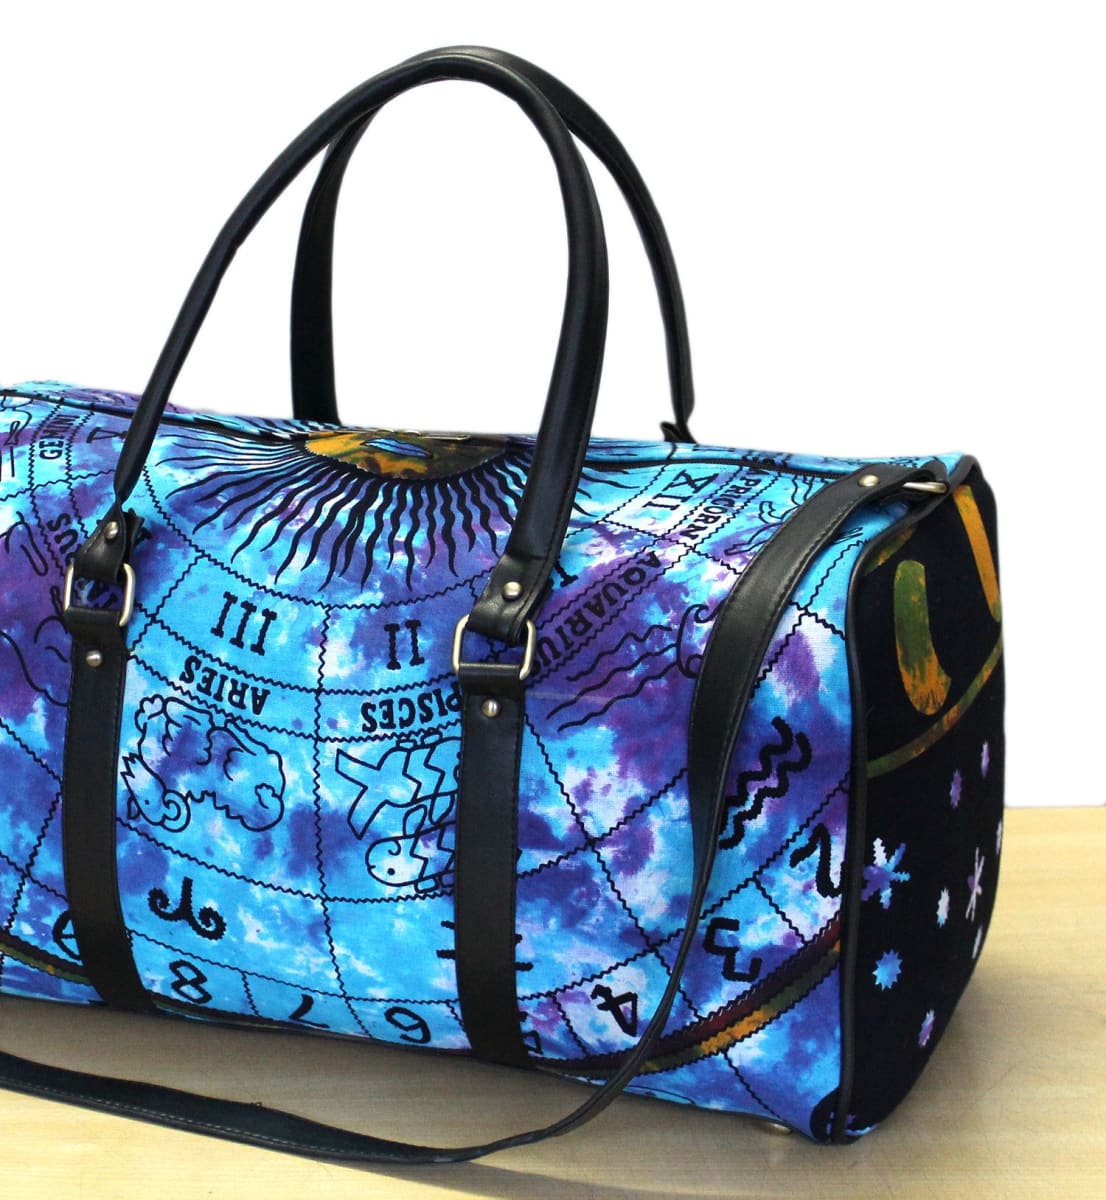 Oflamn Weekender Bag for Women Carry-On Luggage Bohemian style Duffle Bag  Overni